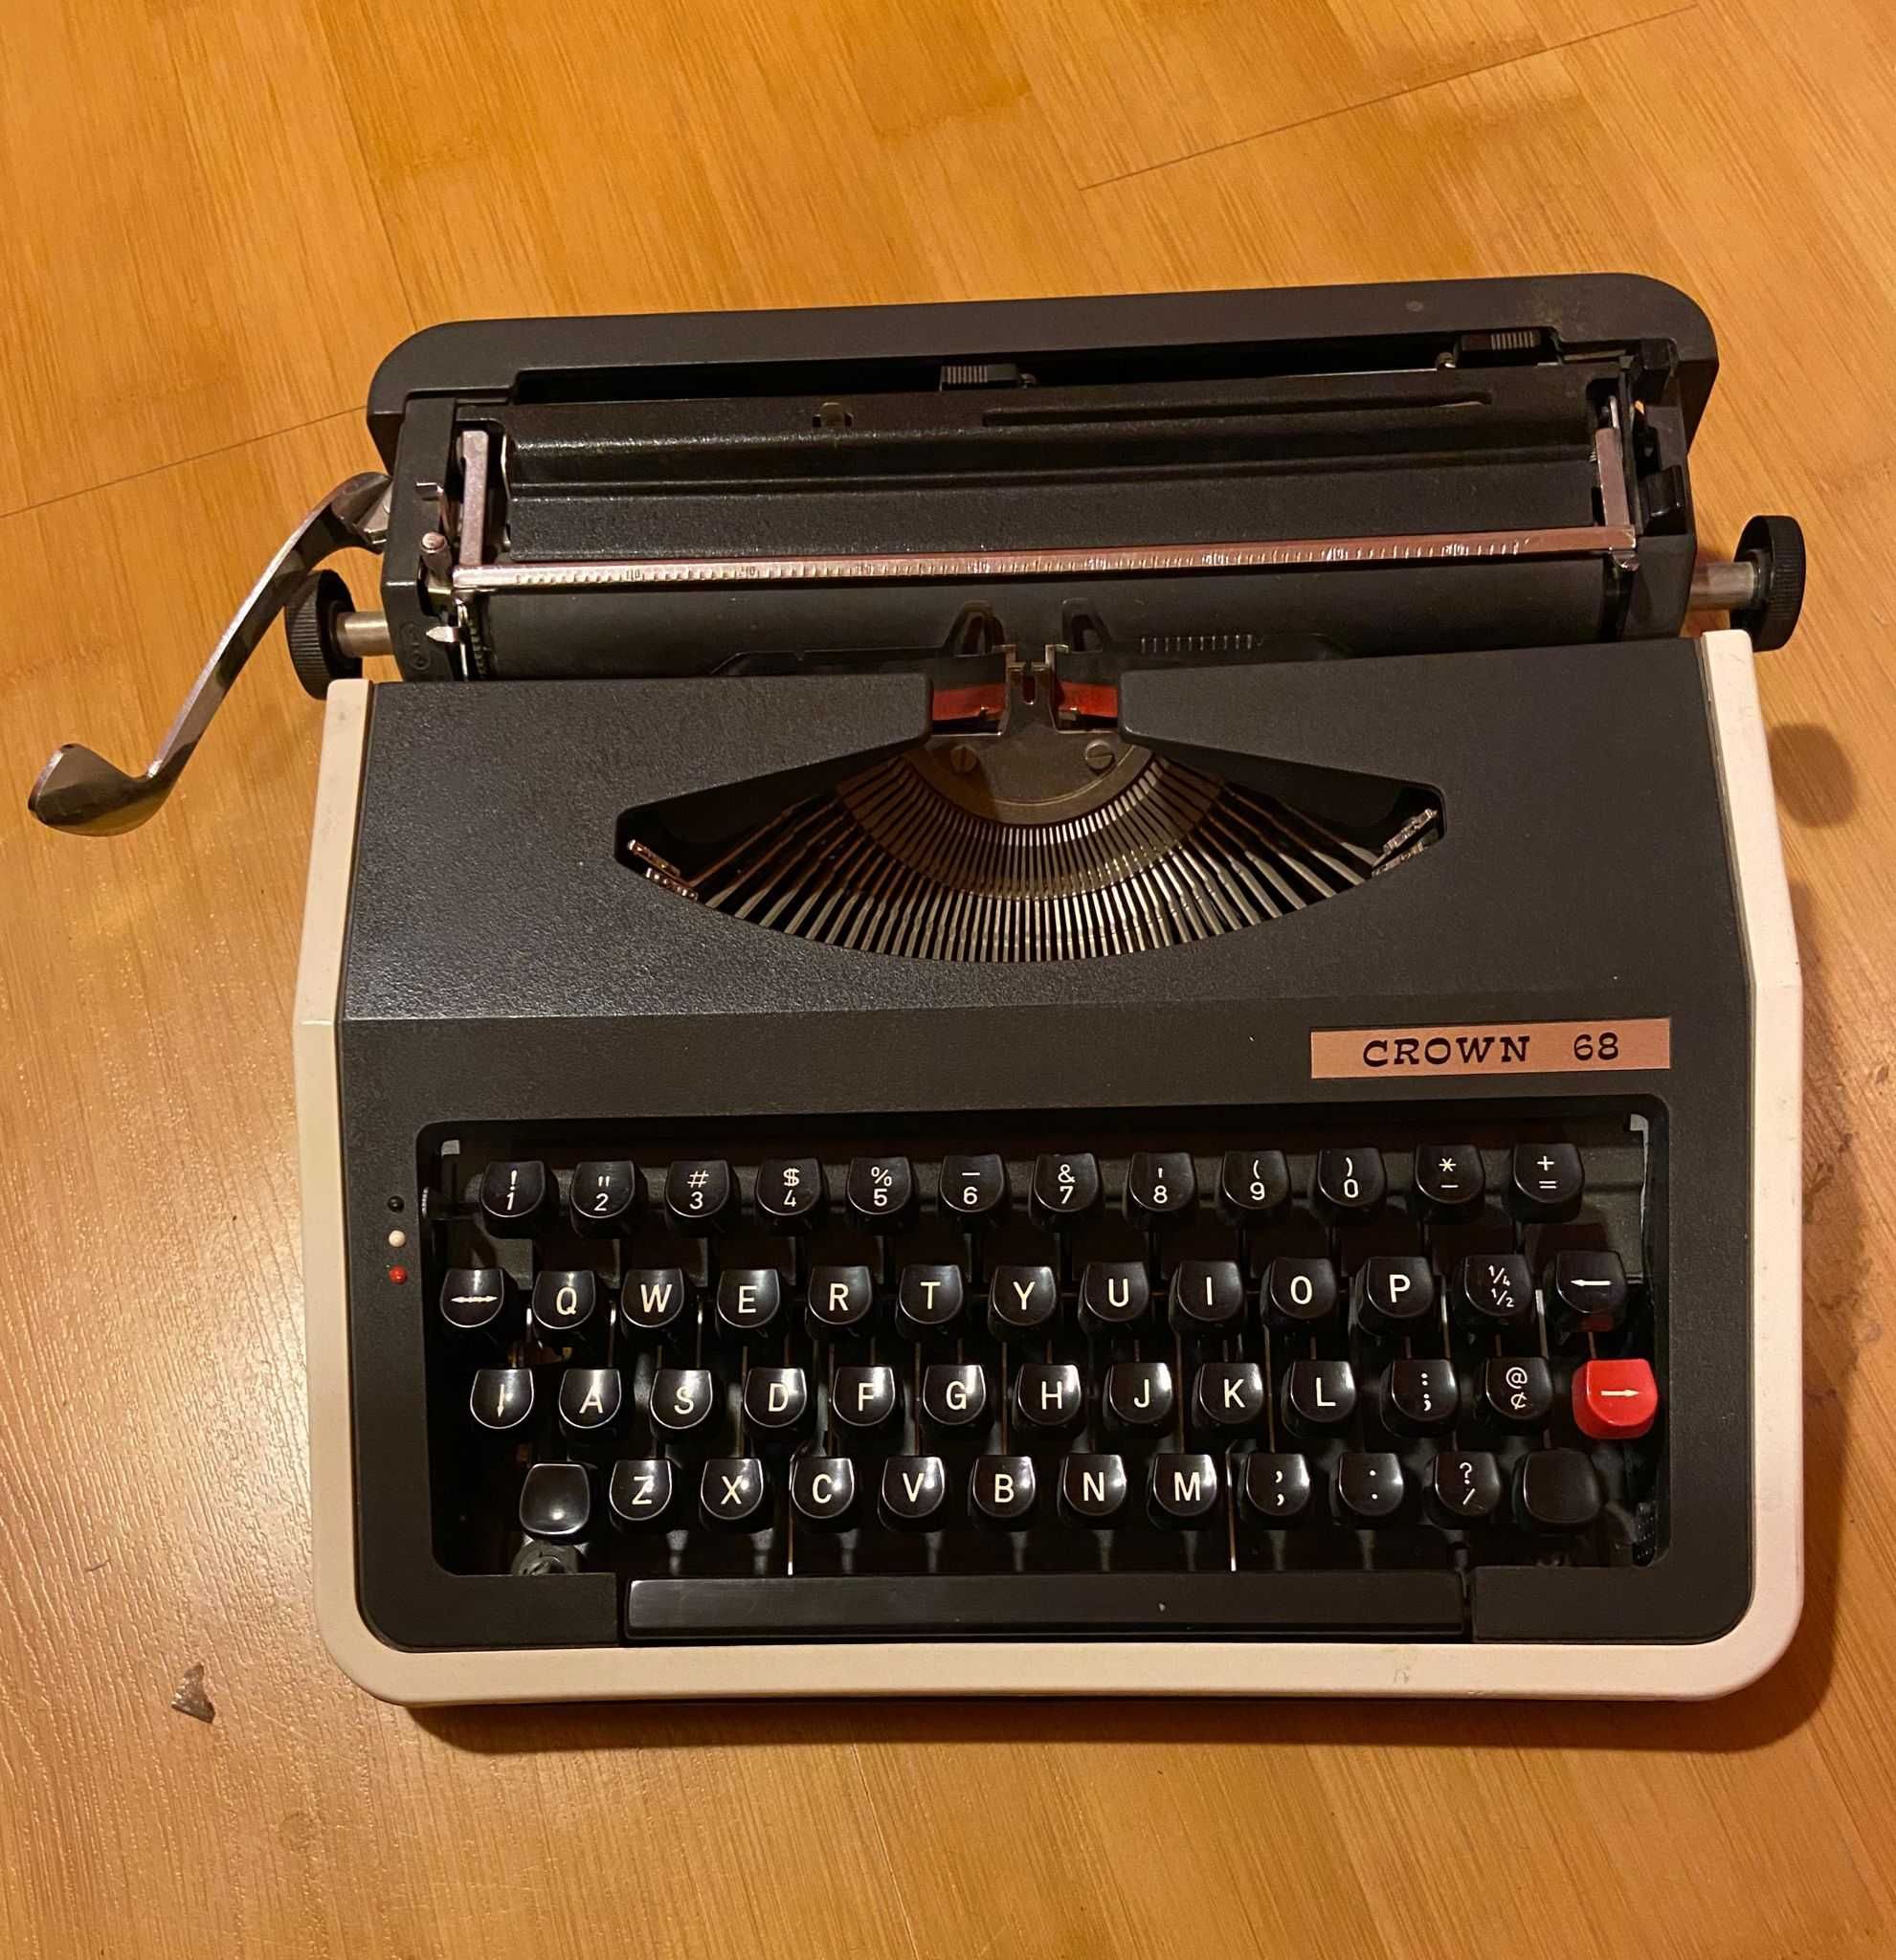 Masina de scris de colectie, vintage : Model Crown 68